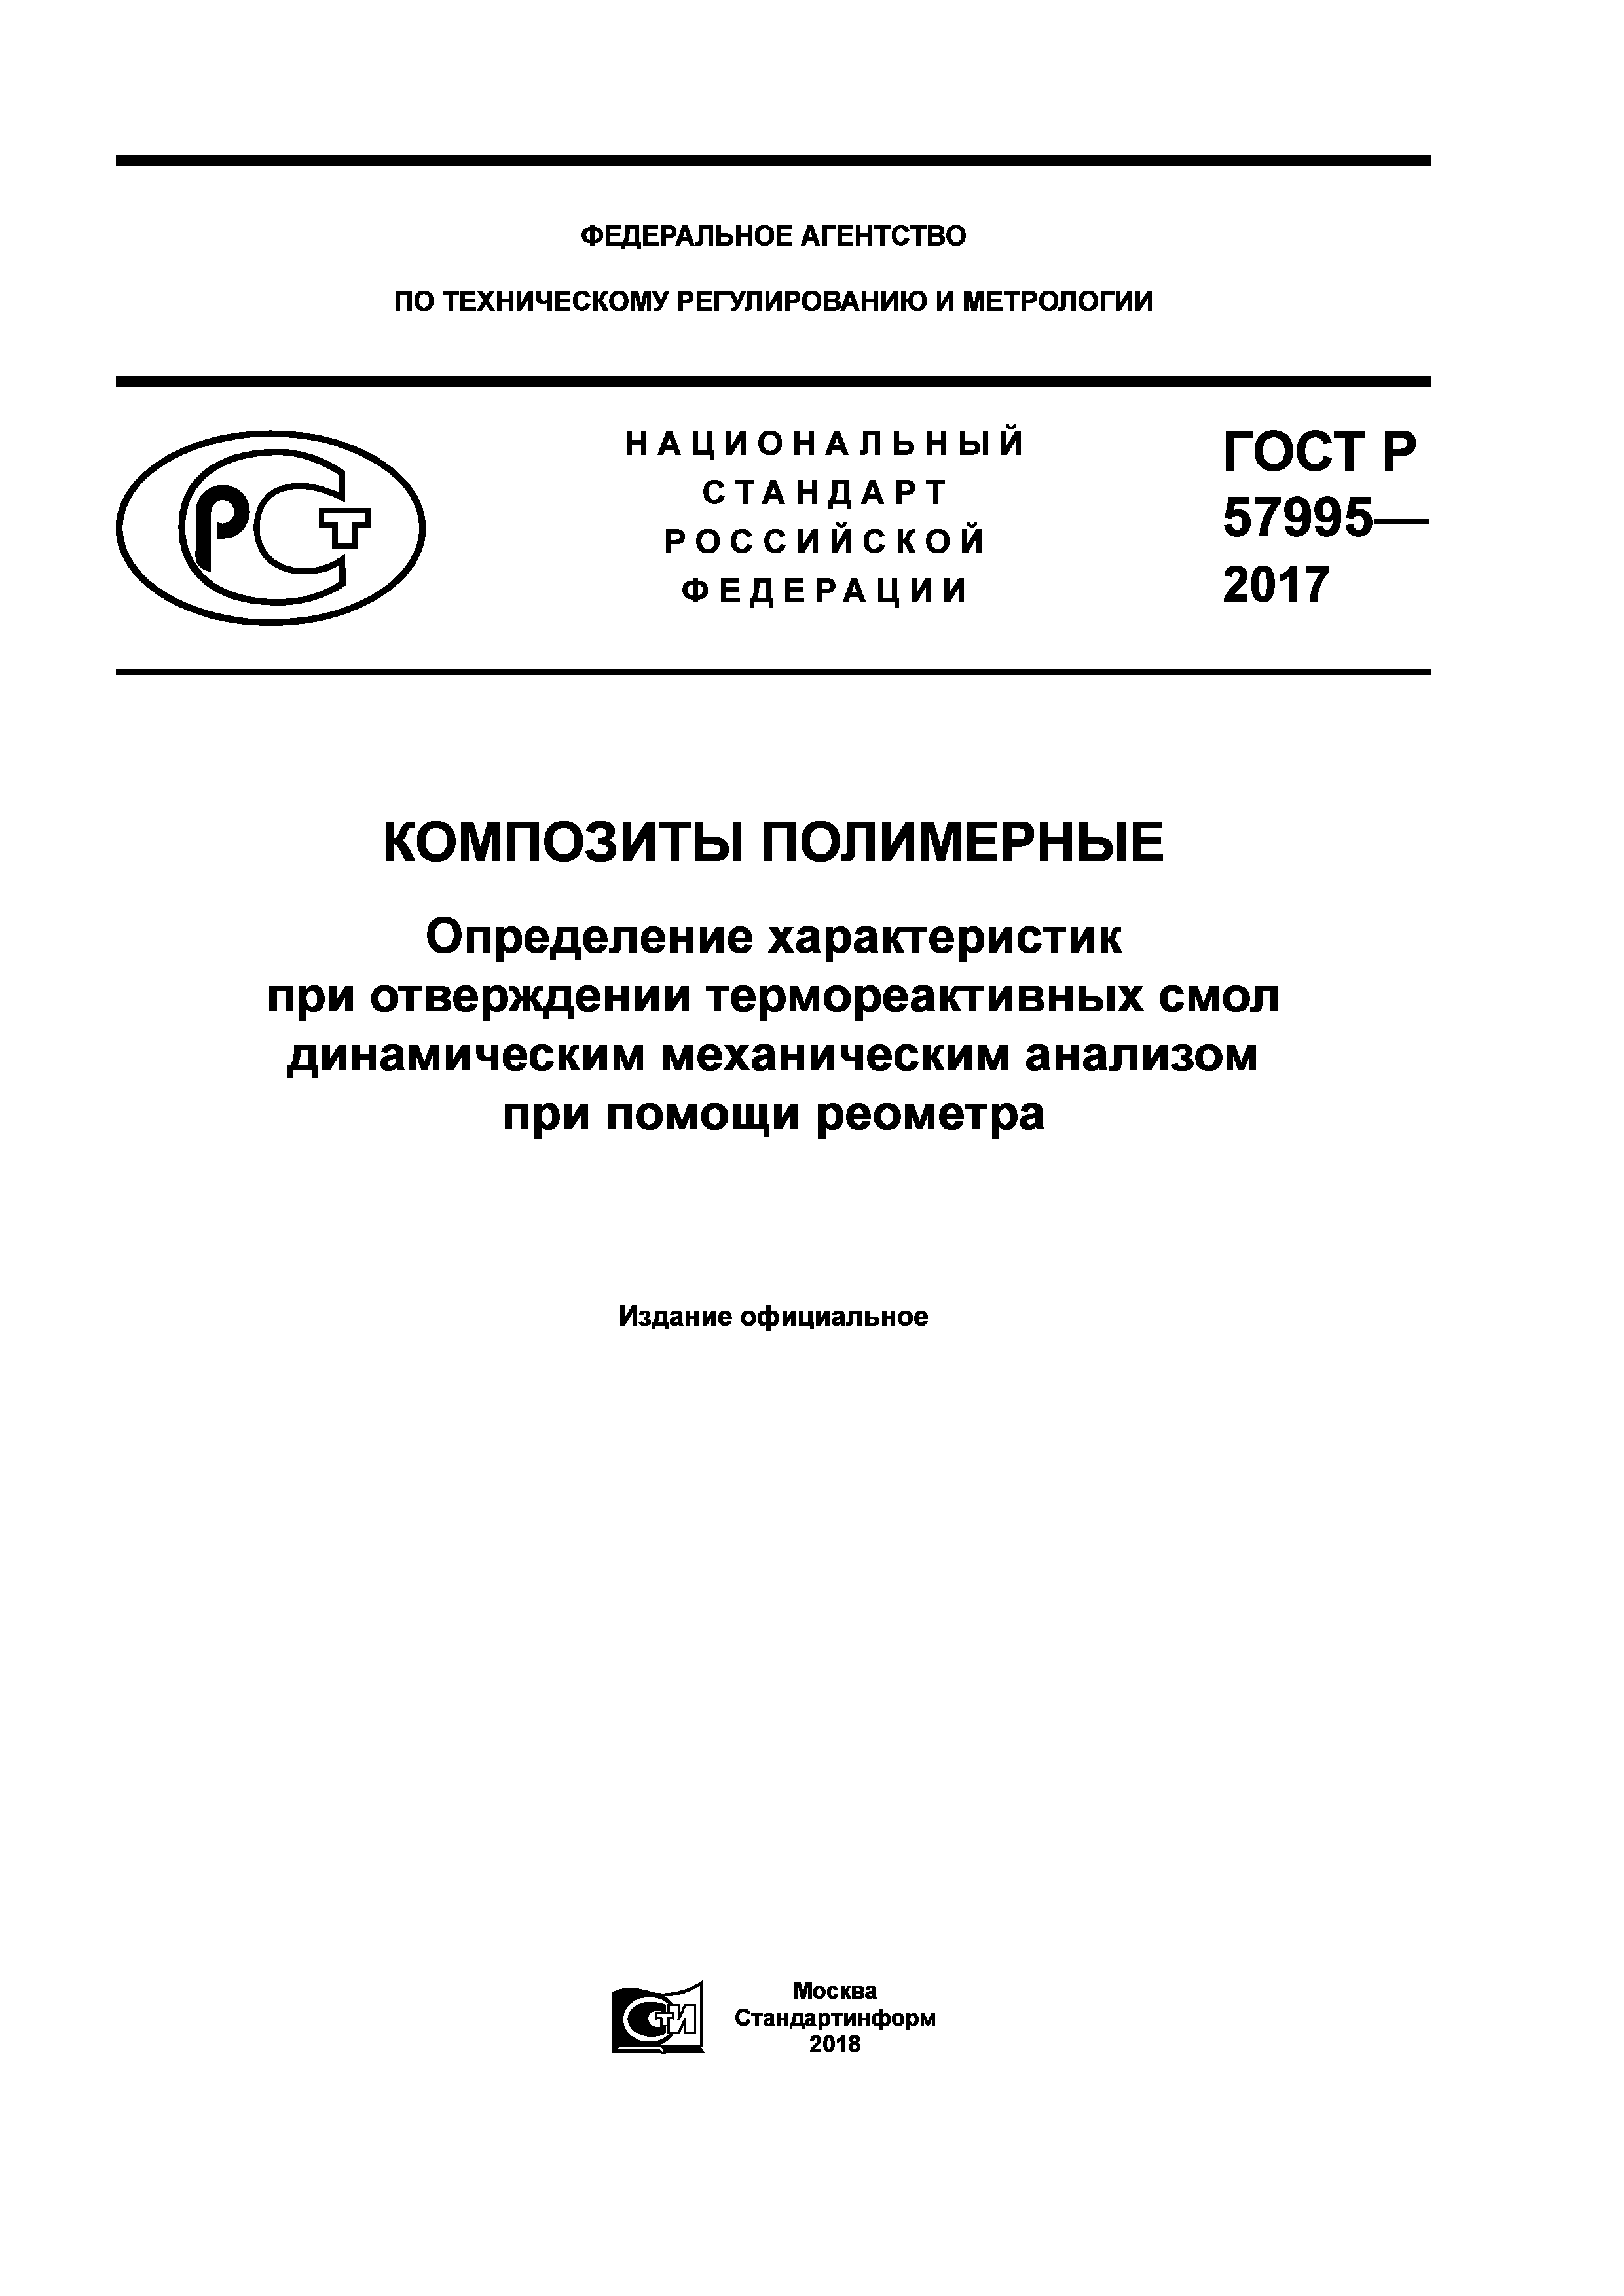 ГОСТ Р 57995-2017